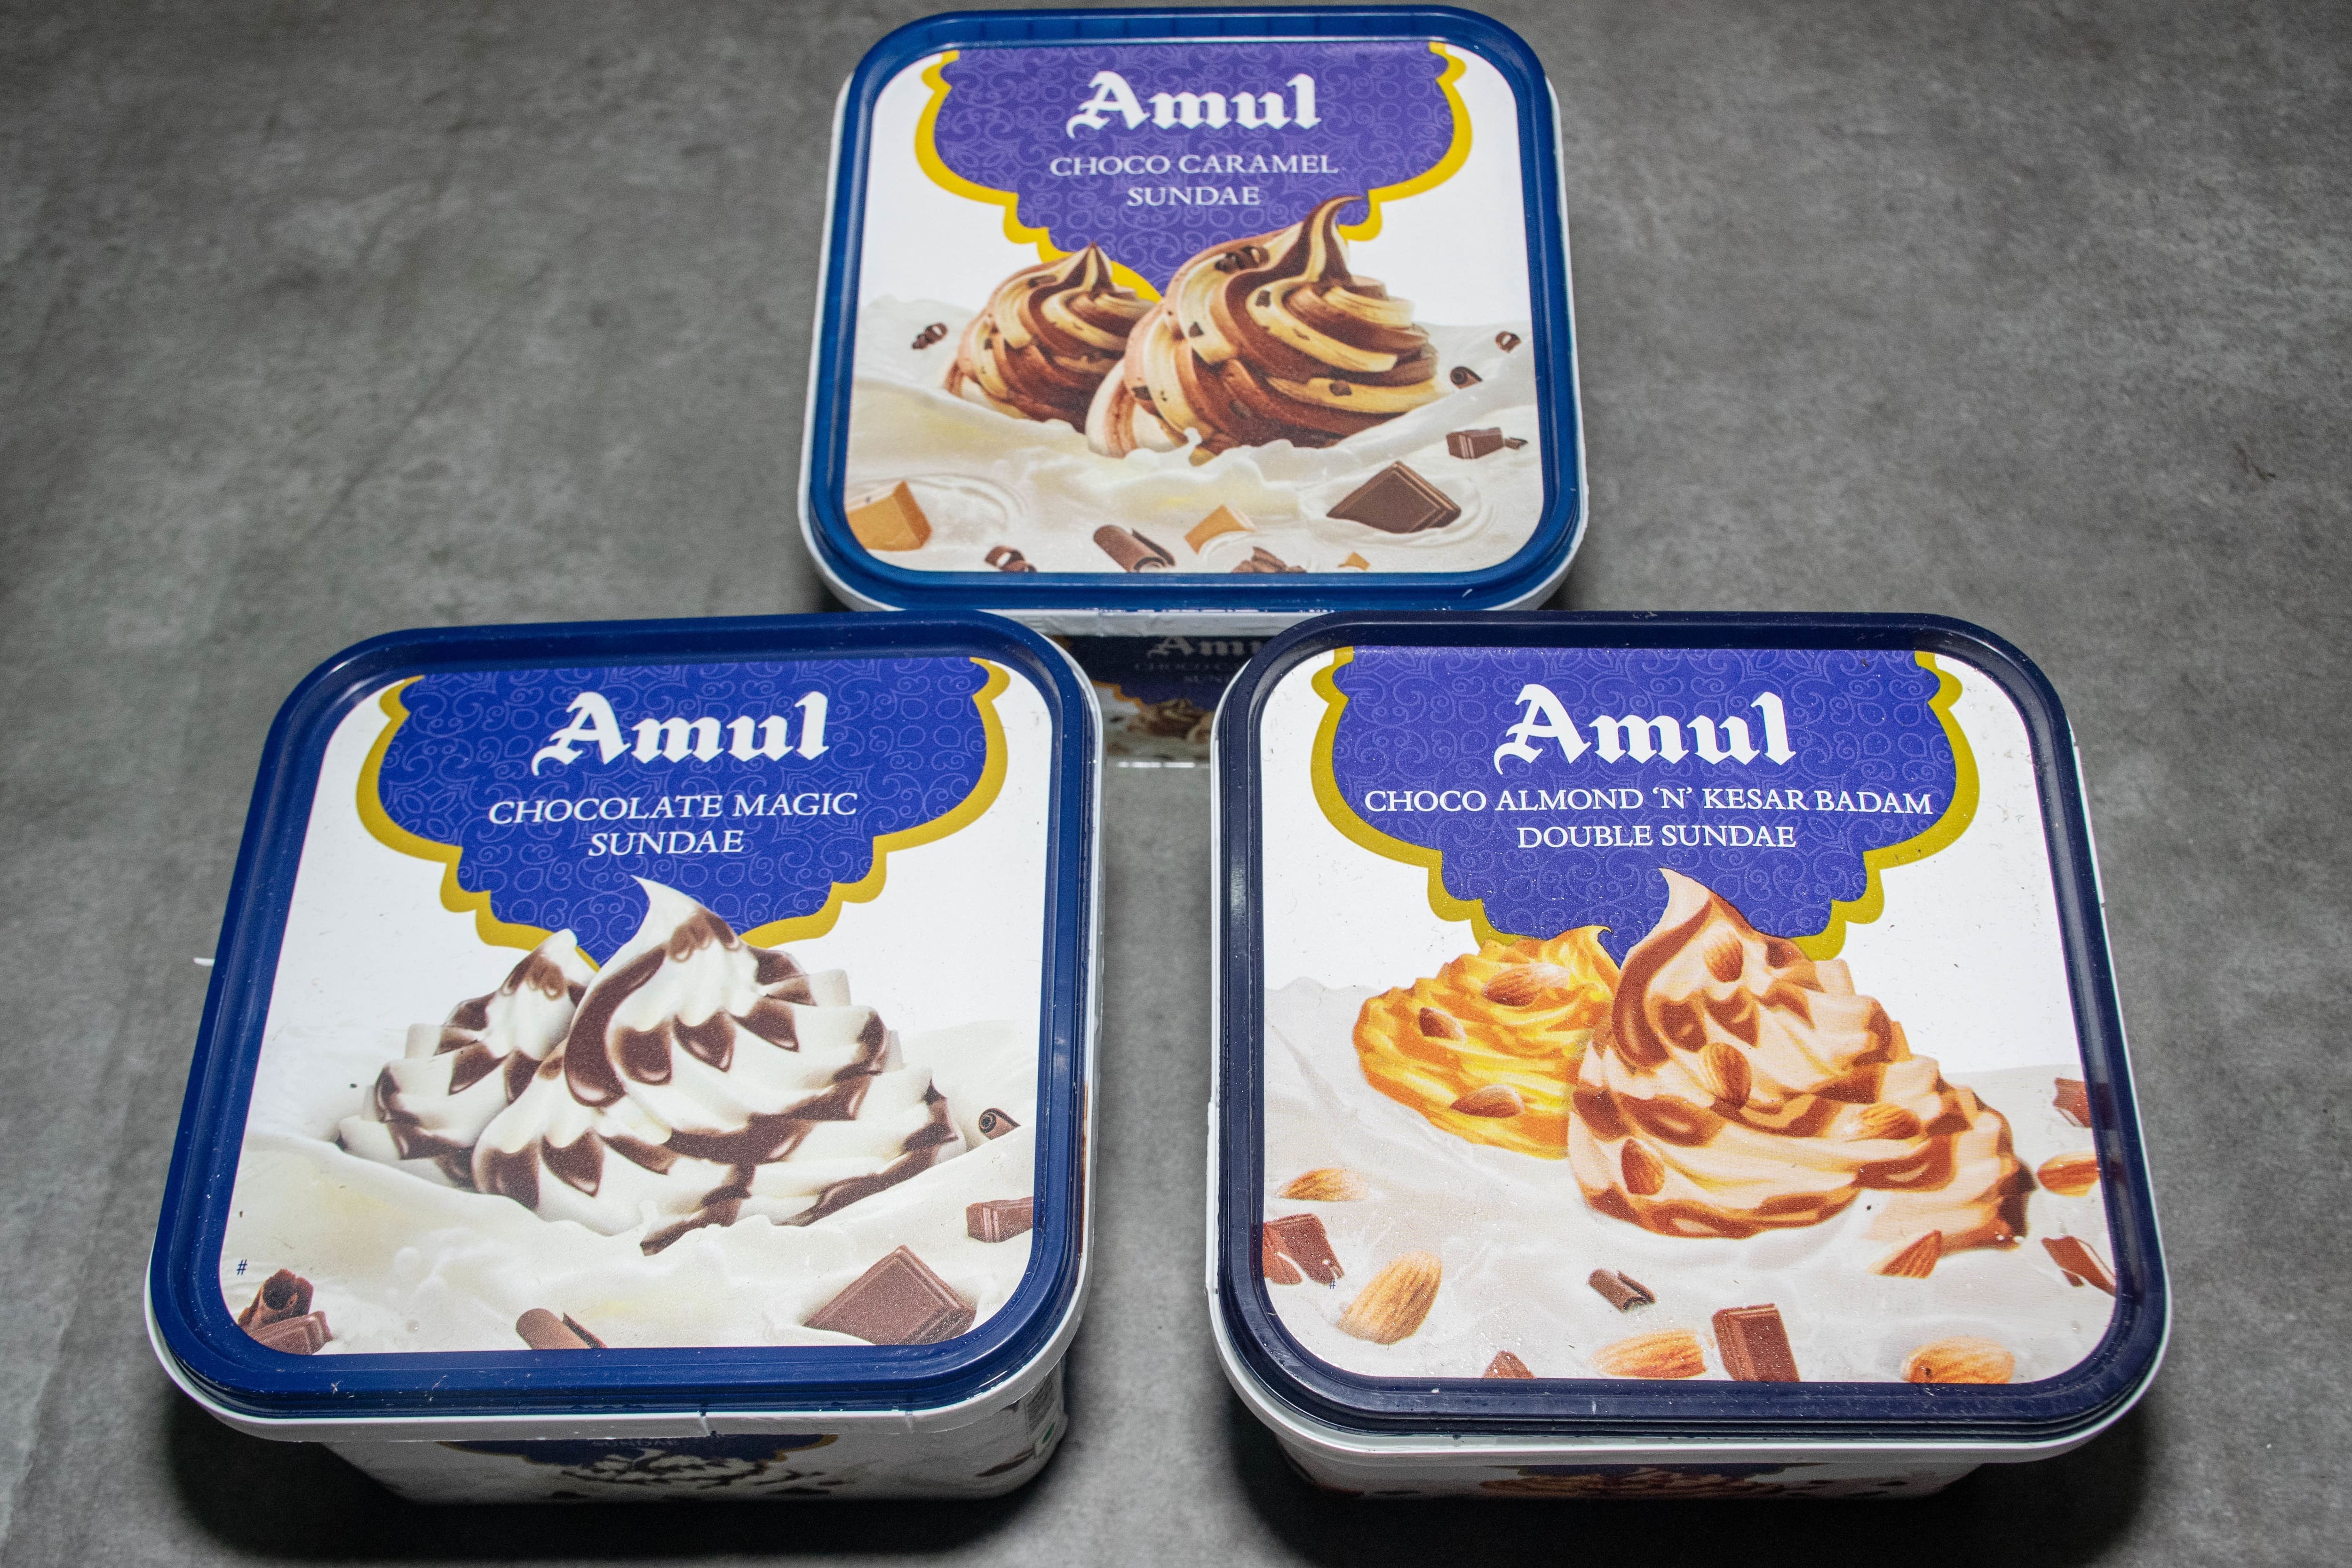 Description. #Cake #magic is a... - AMUL ICE Creams Guntur | Facebook